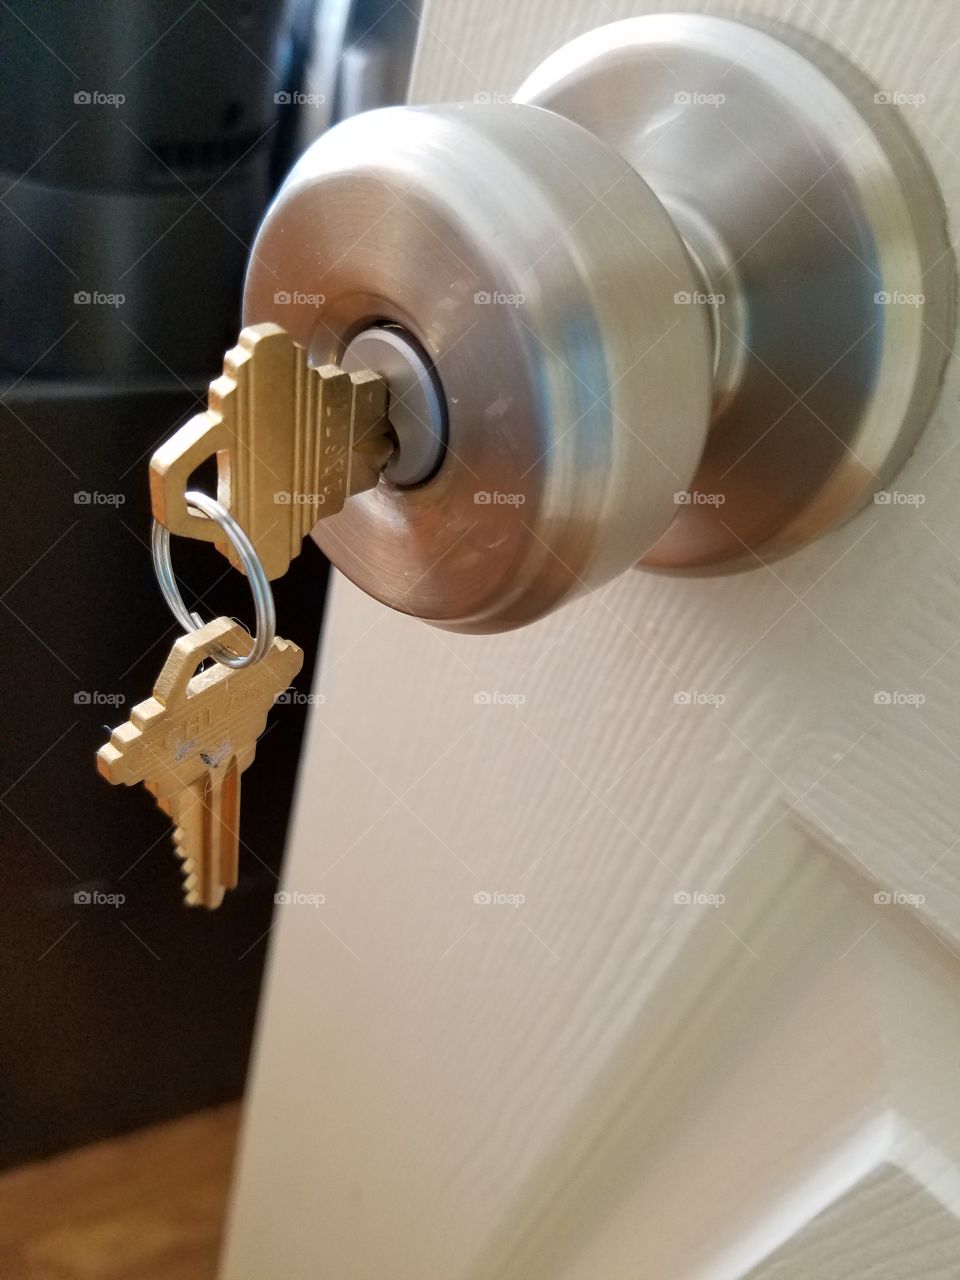 Lock and keys